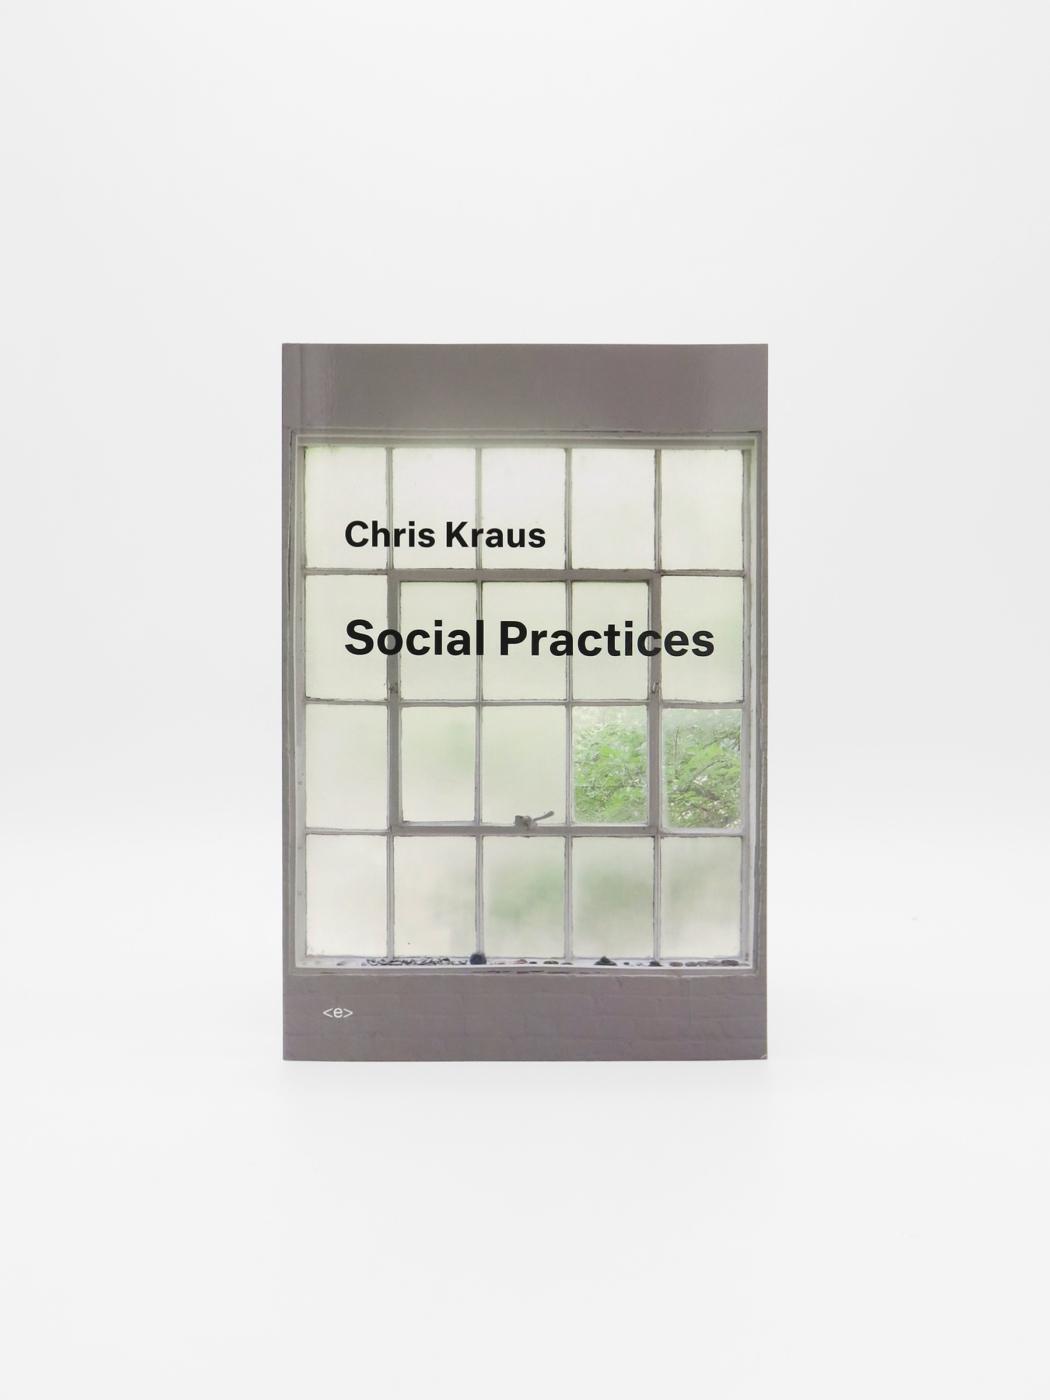 Chris Kraus, Social Practices